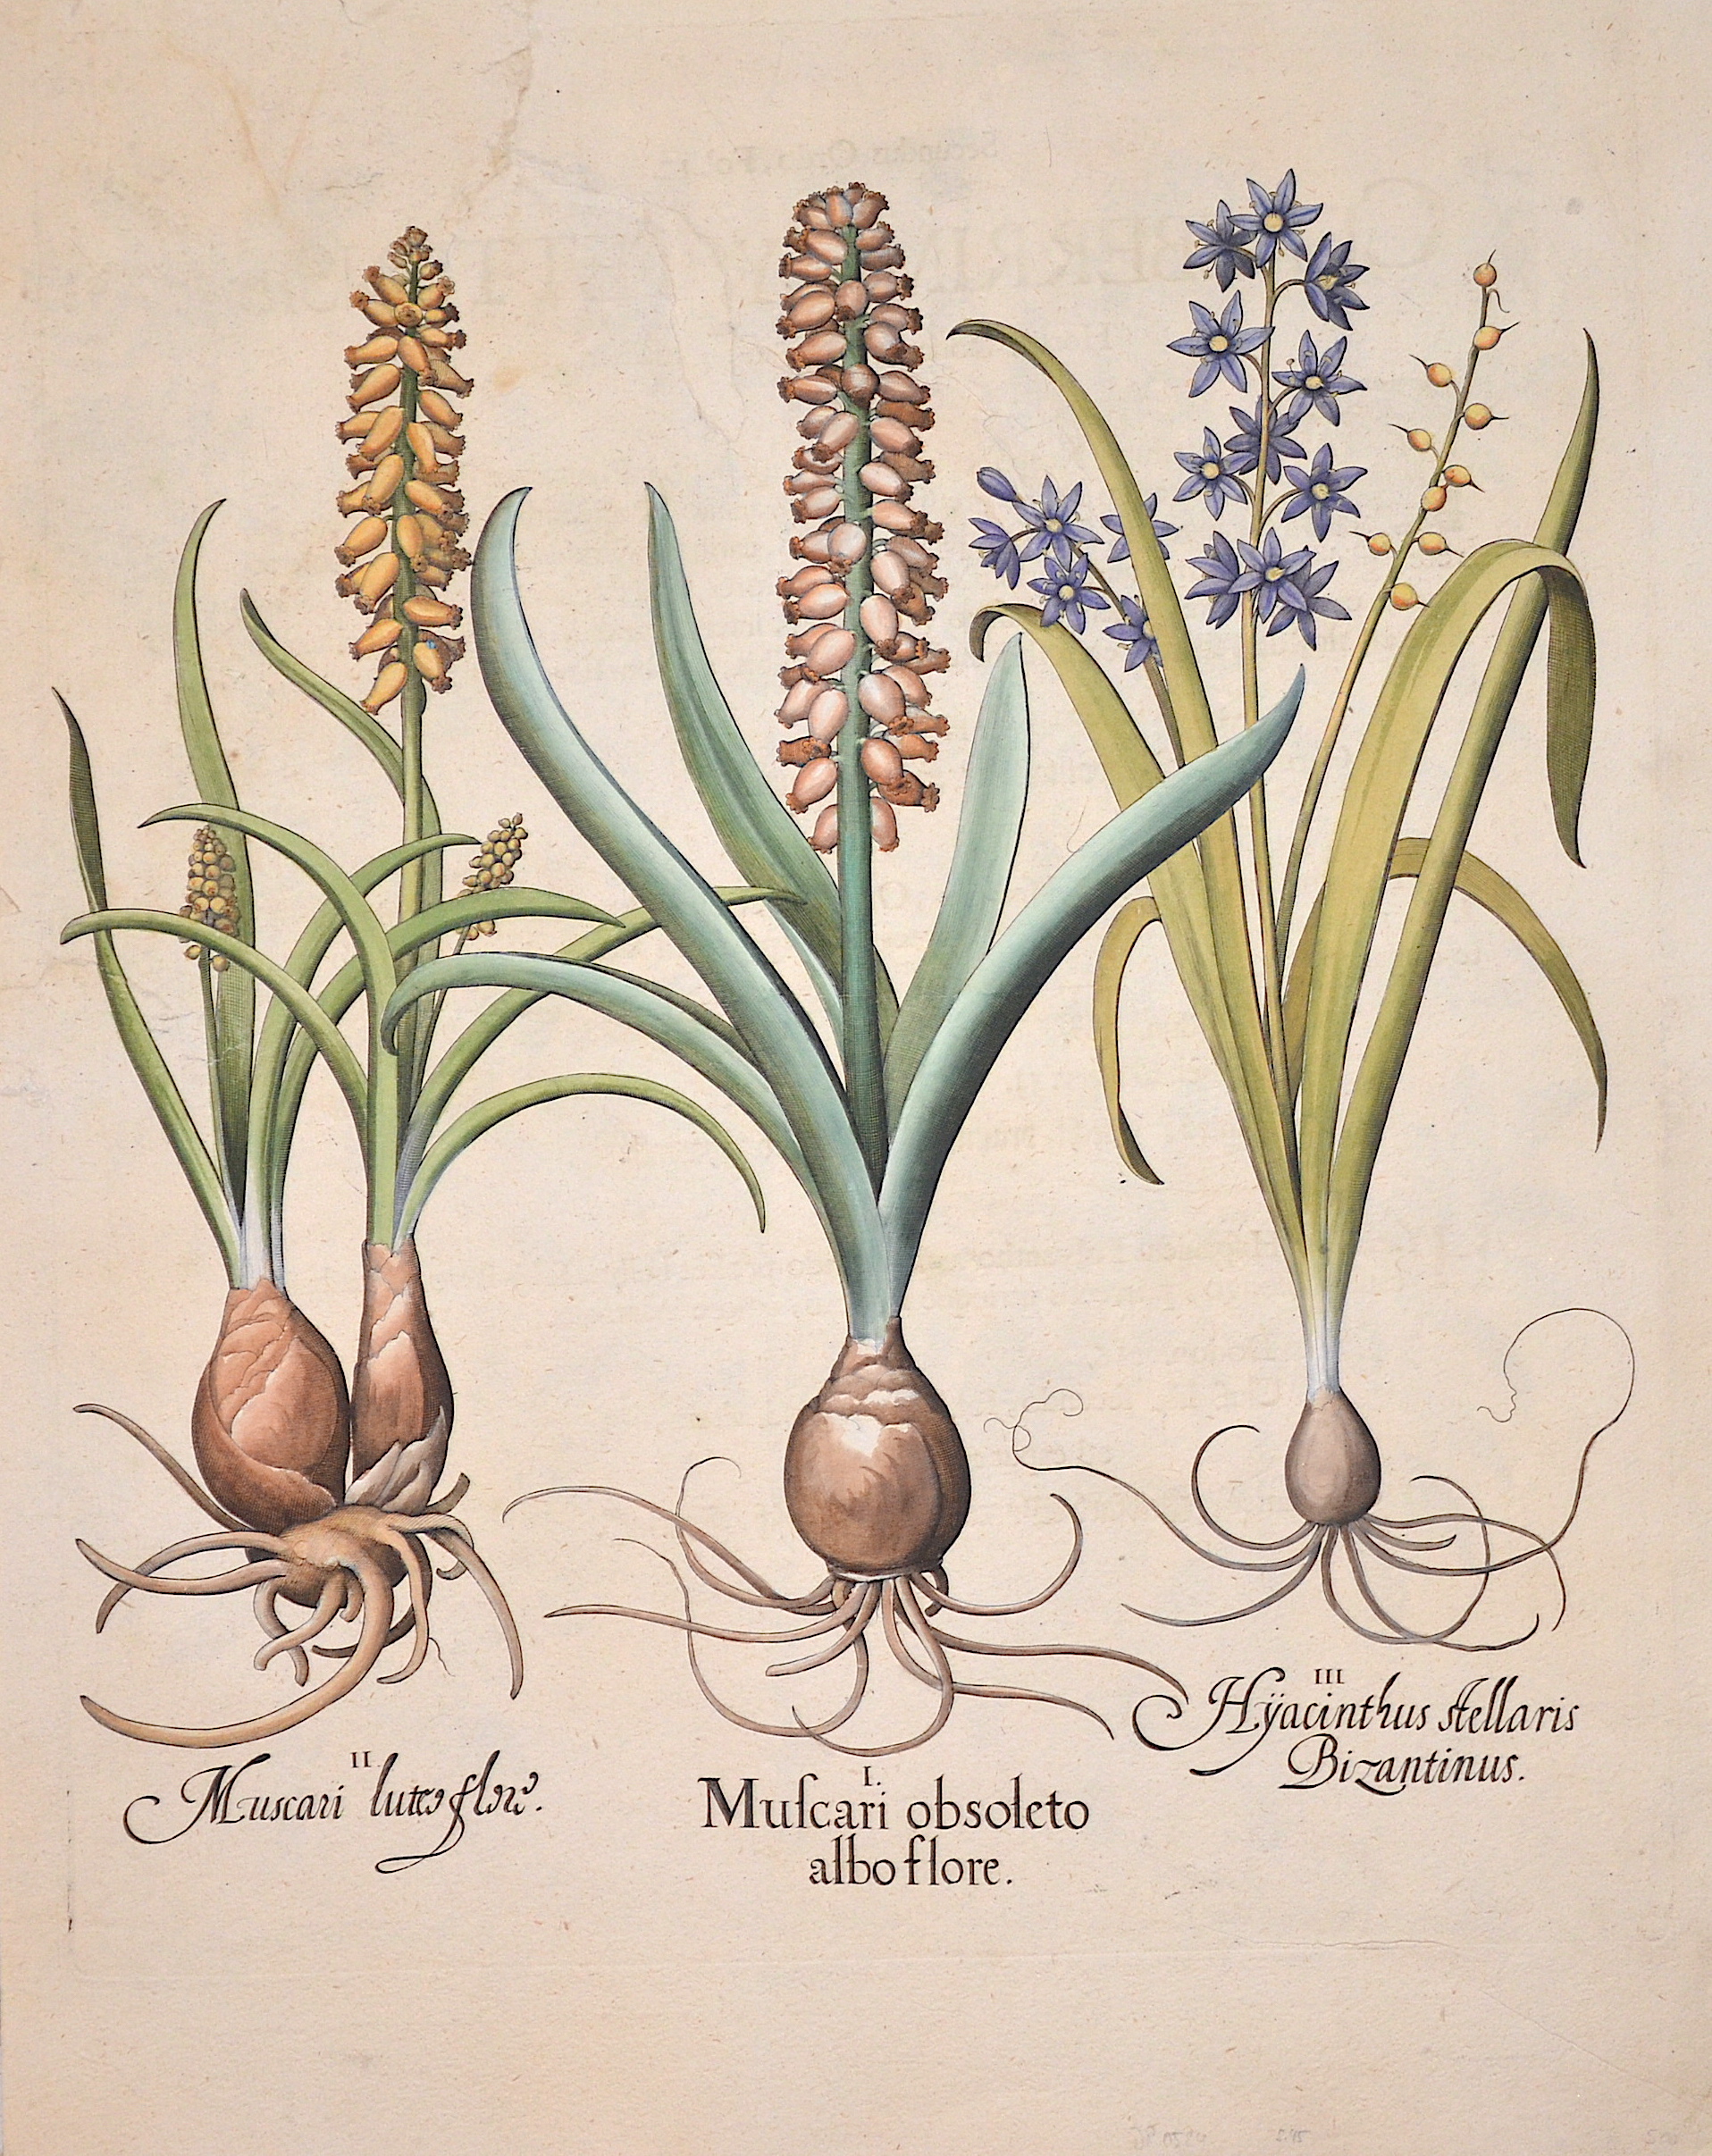 Besler  Muscari obsoleto albo flore/ Muscari luteo flore/ Hyacinthus stellaris Bizantinus